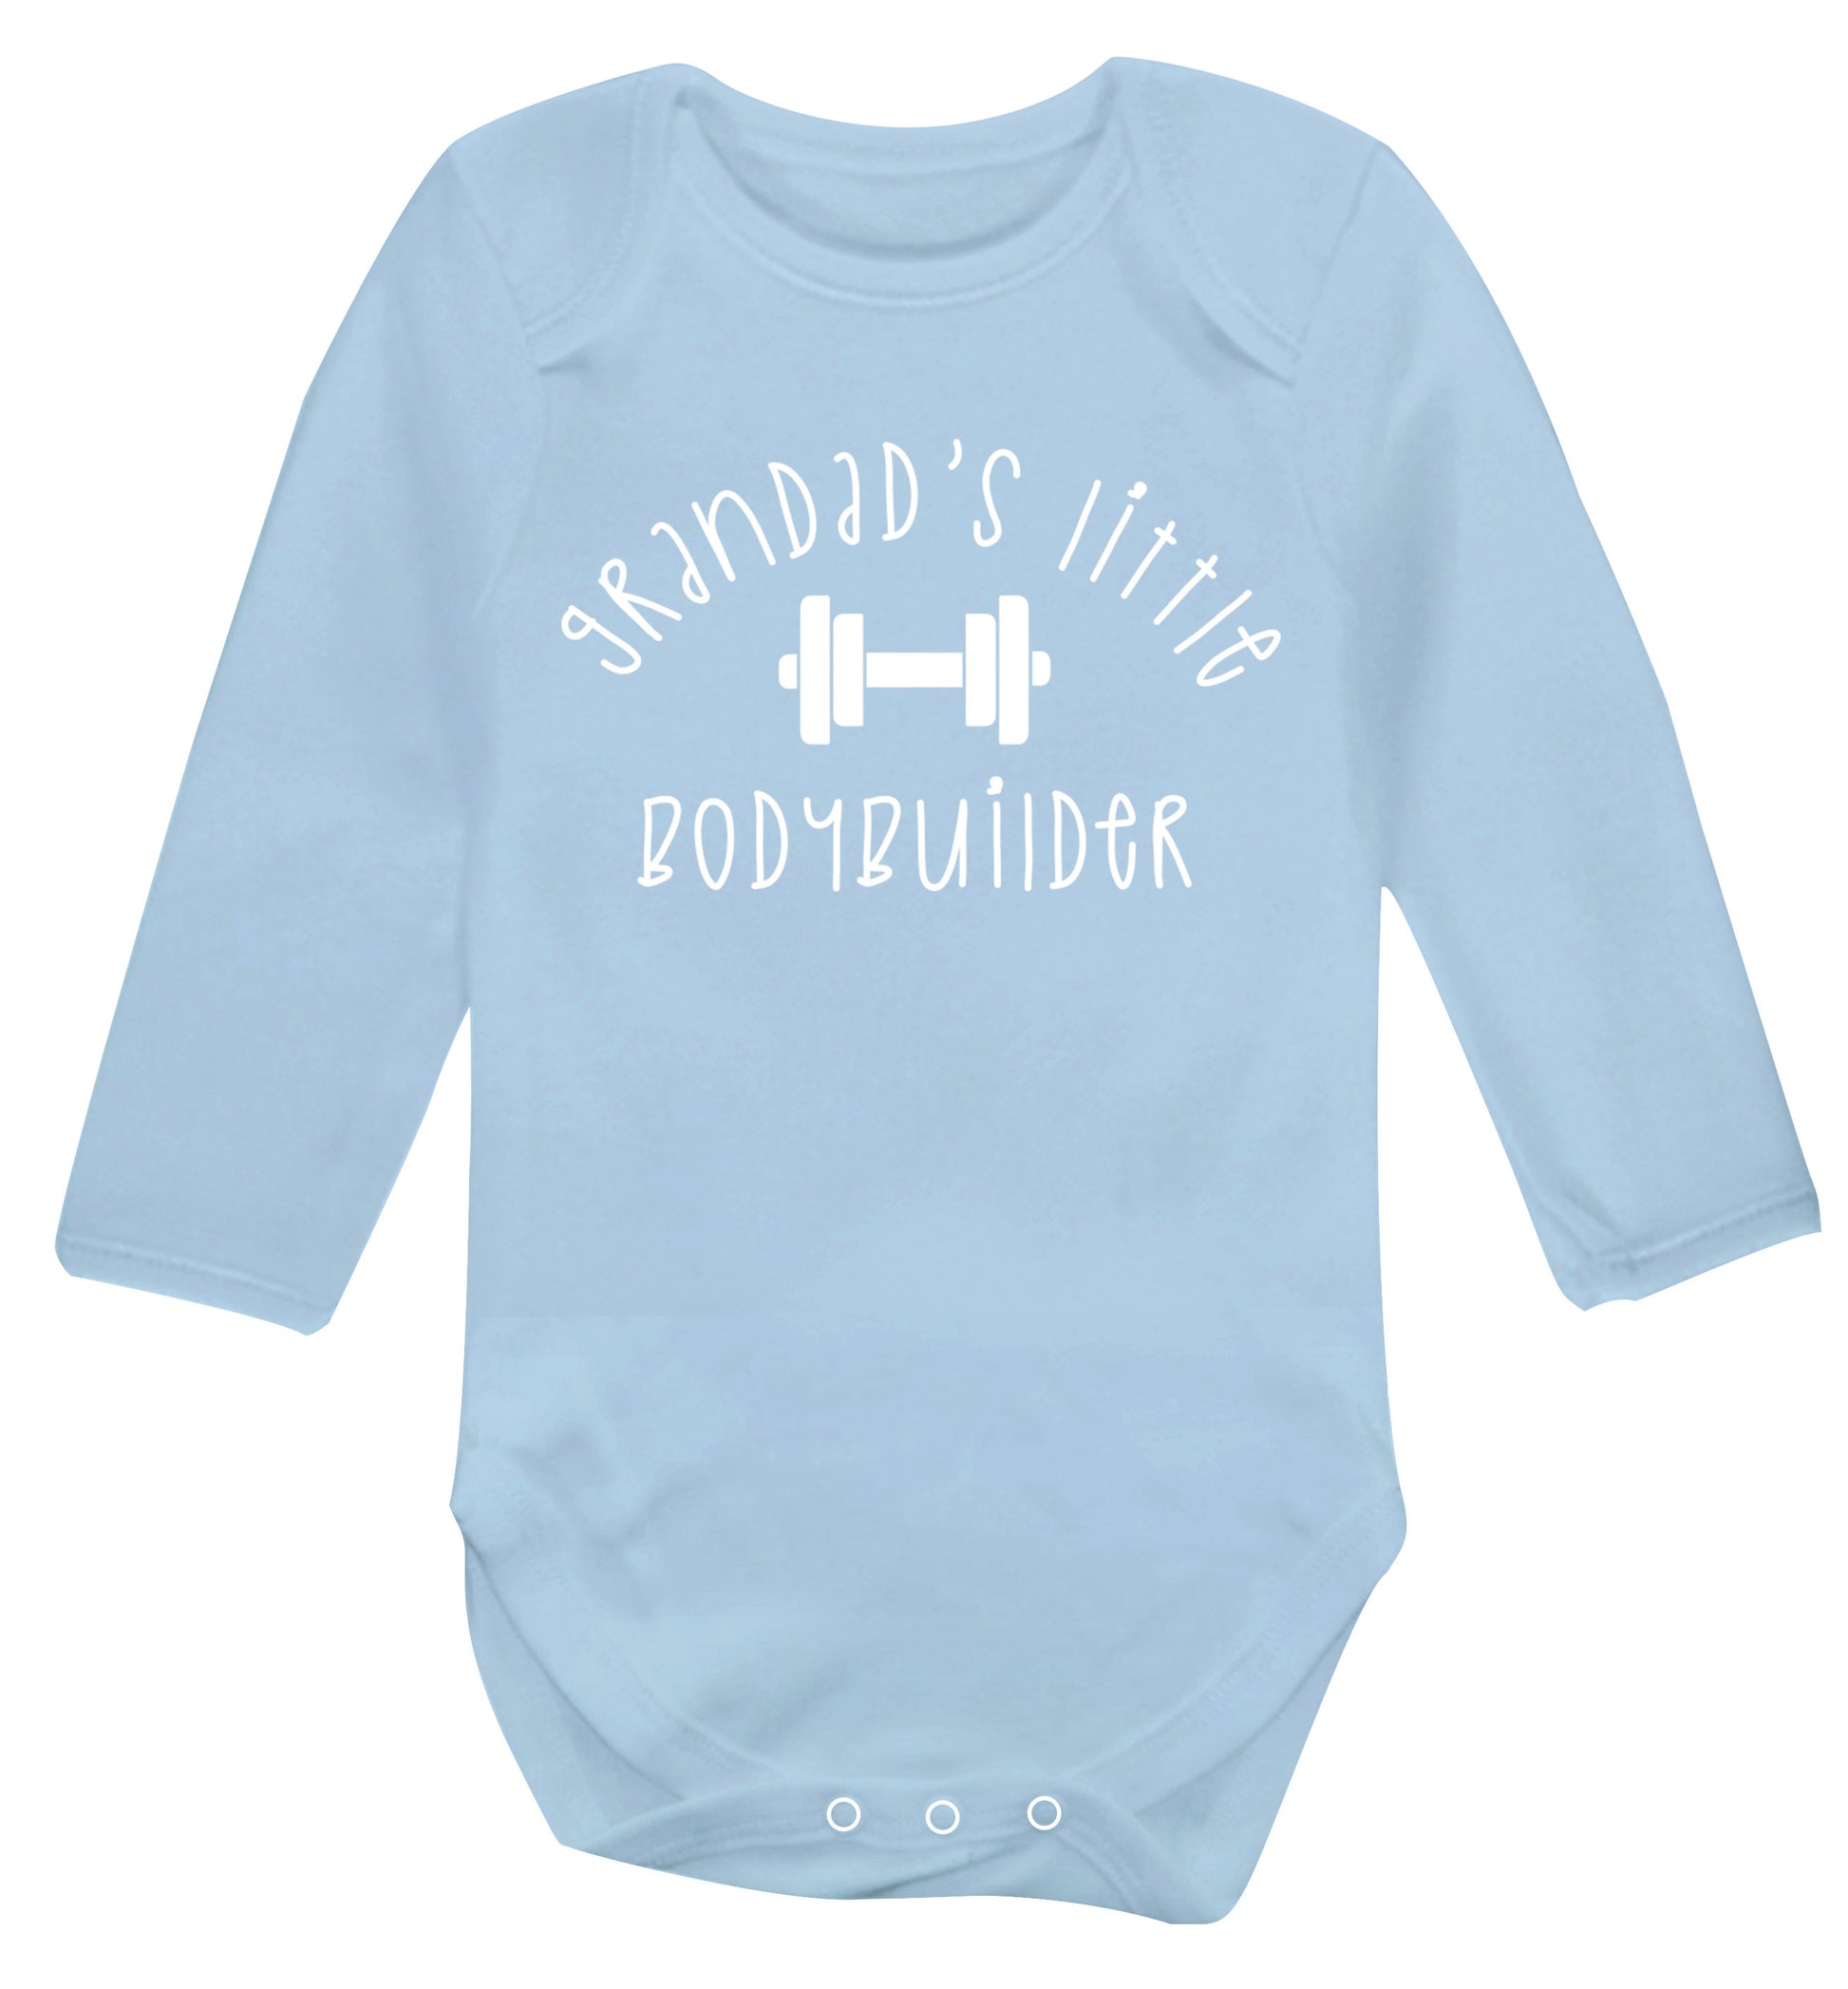 Grandad's little bodybuilder Baby Vest long sleeved pale blue 6-12 months